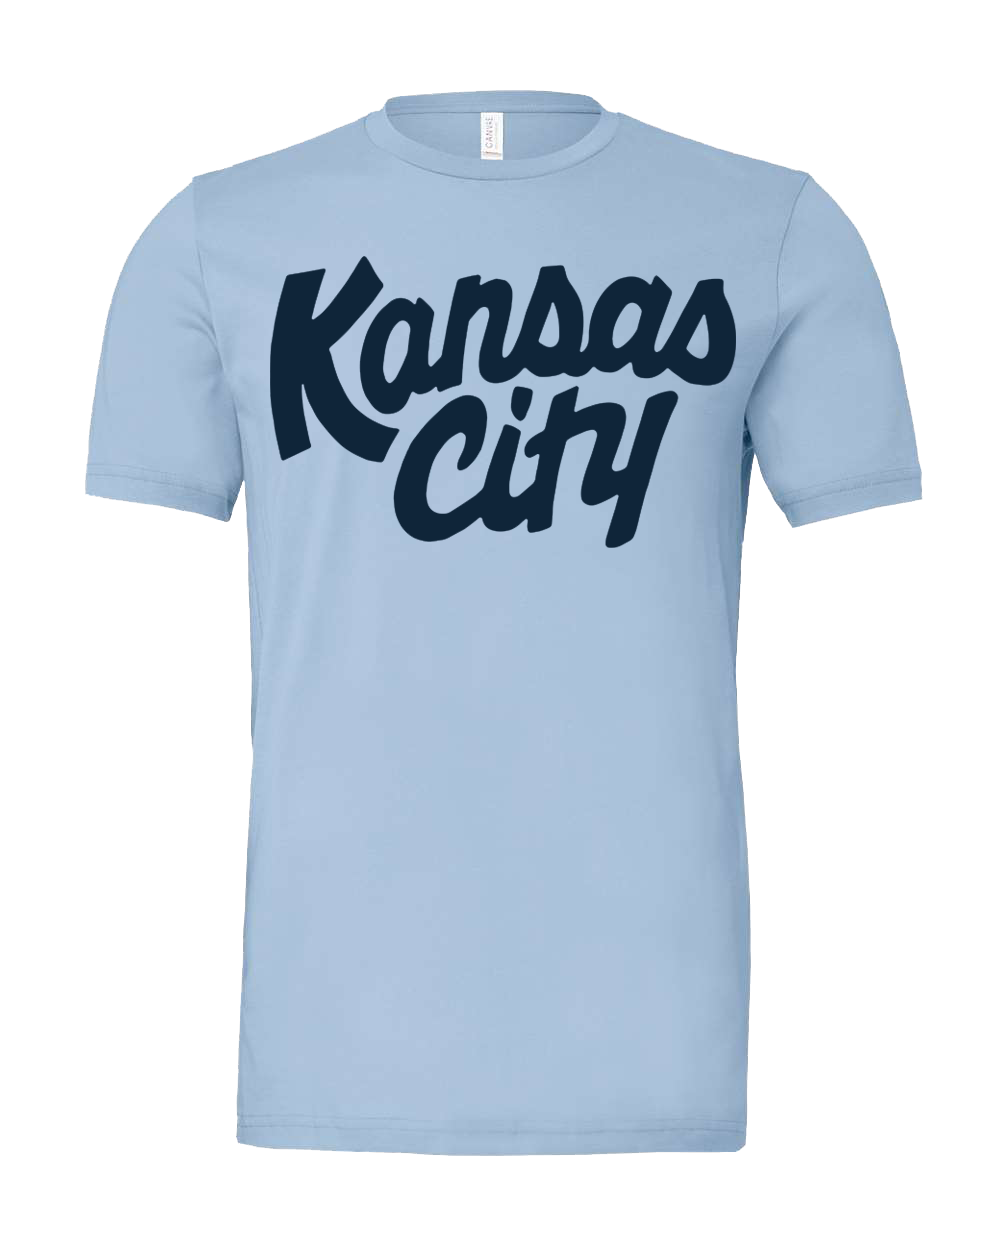 Retro Kansas City Kids T-Shirt - Red ...